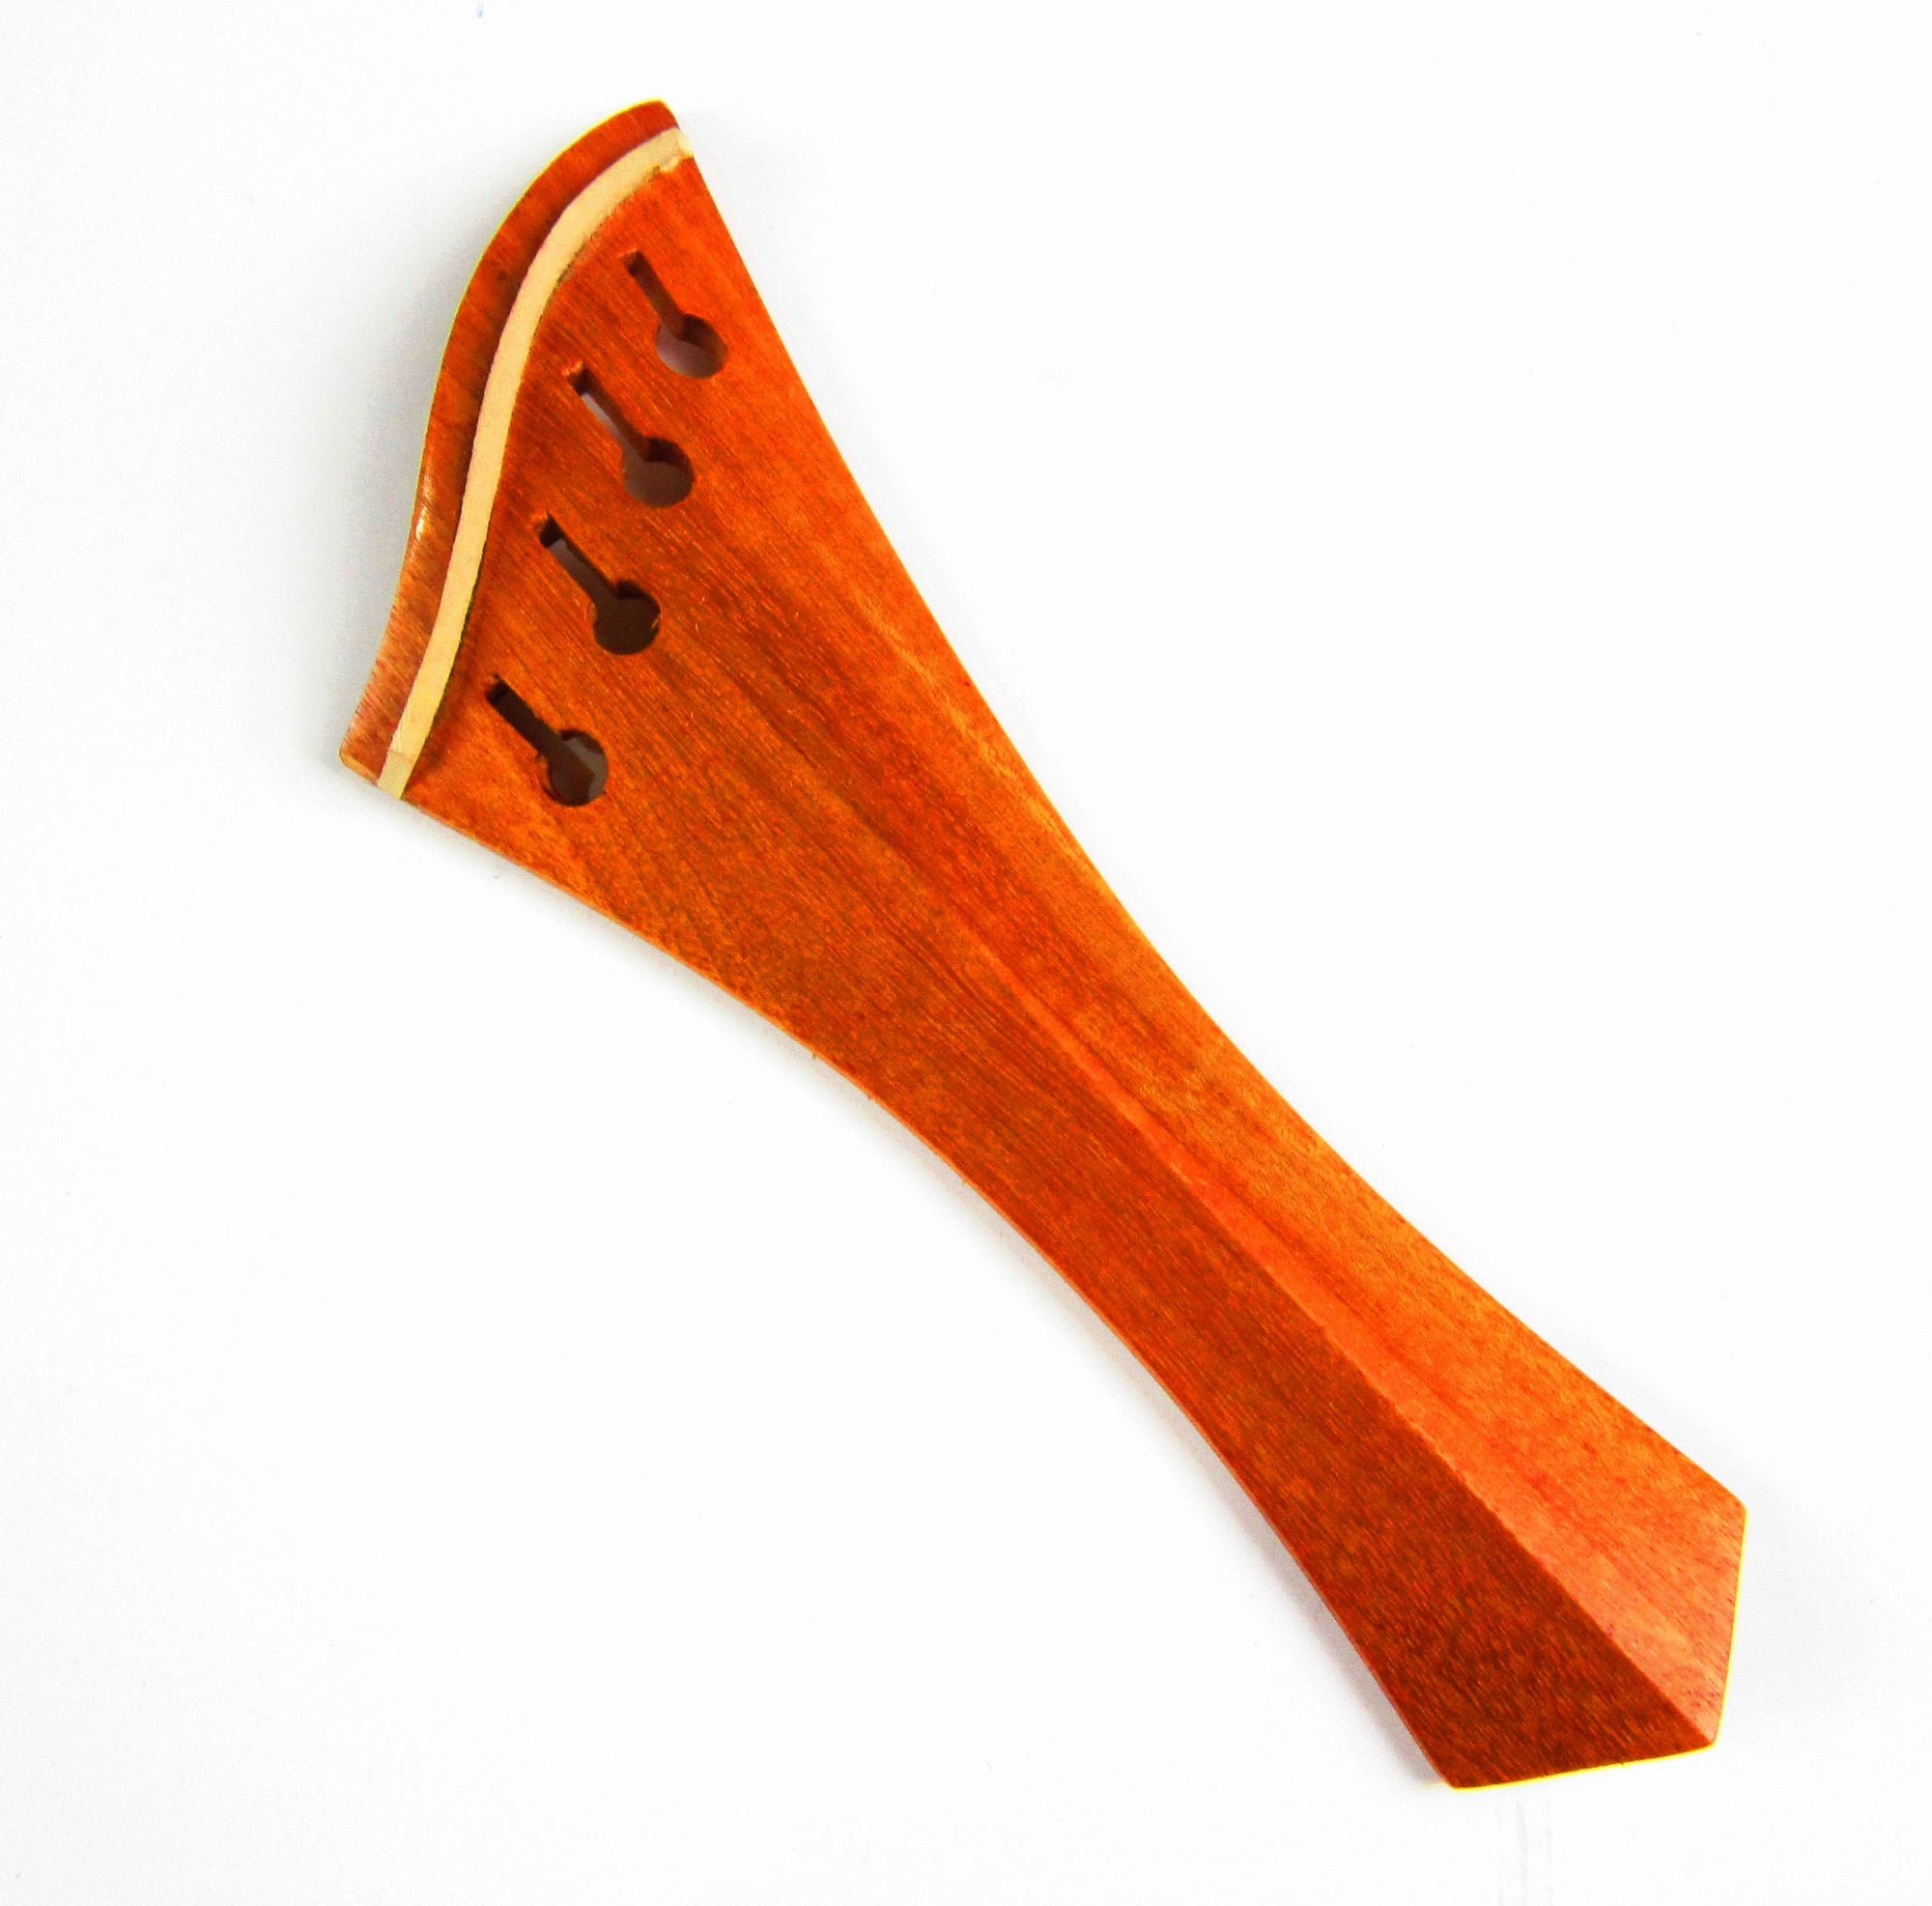 Violin tailpiece-Schmidt Harp style"-Pernambuco-White fret